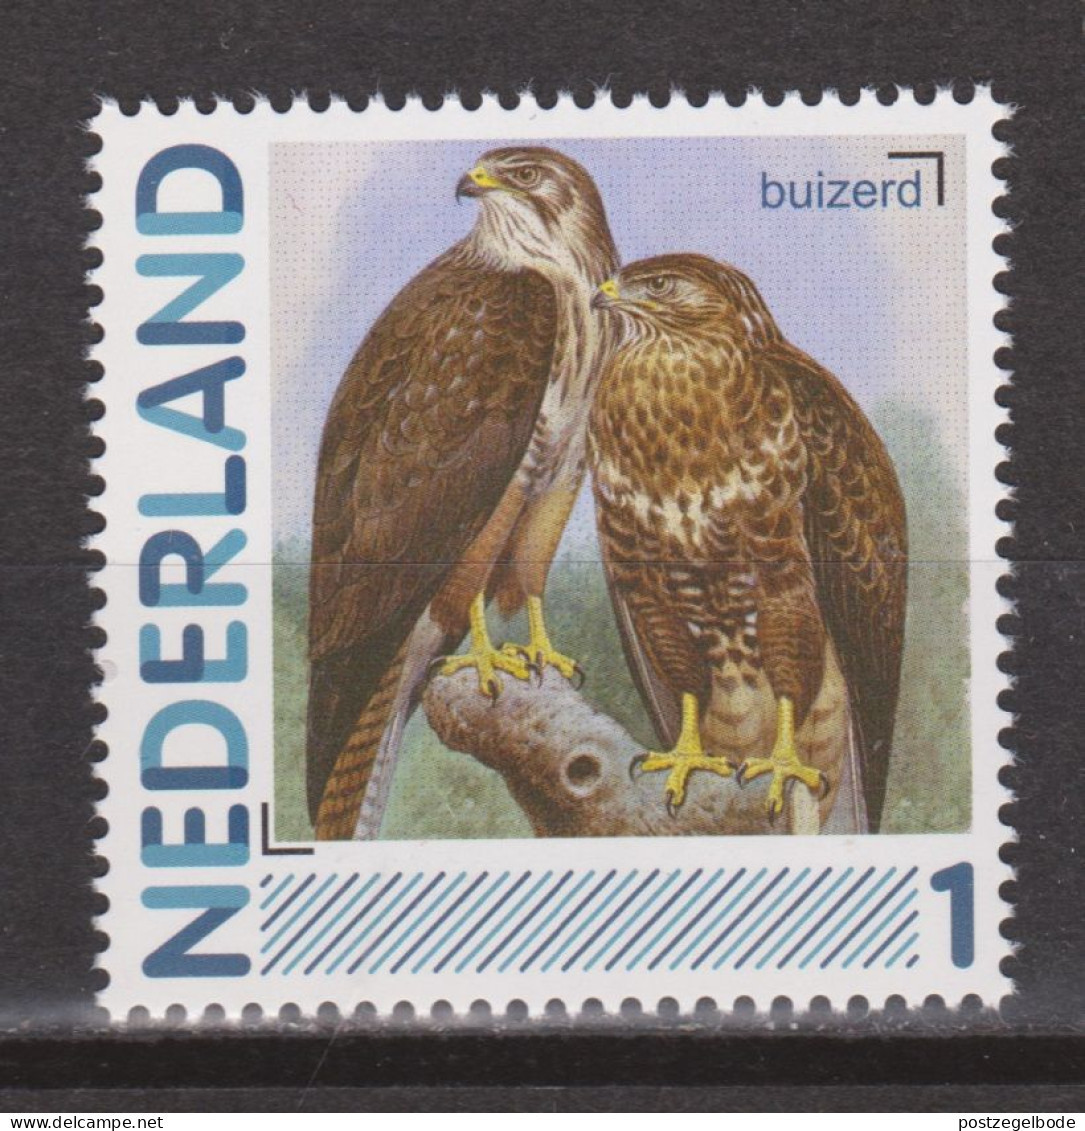 Nederland Netherlands Pays Bas MNH Roofvogel Oiseau De Proie Ave De Rapina Bird Of Prey Buizerd Buzzard Buse Ratonero - Eagles & Birds Of Prey